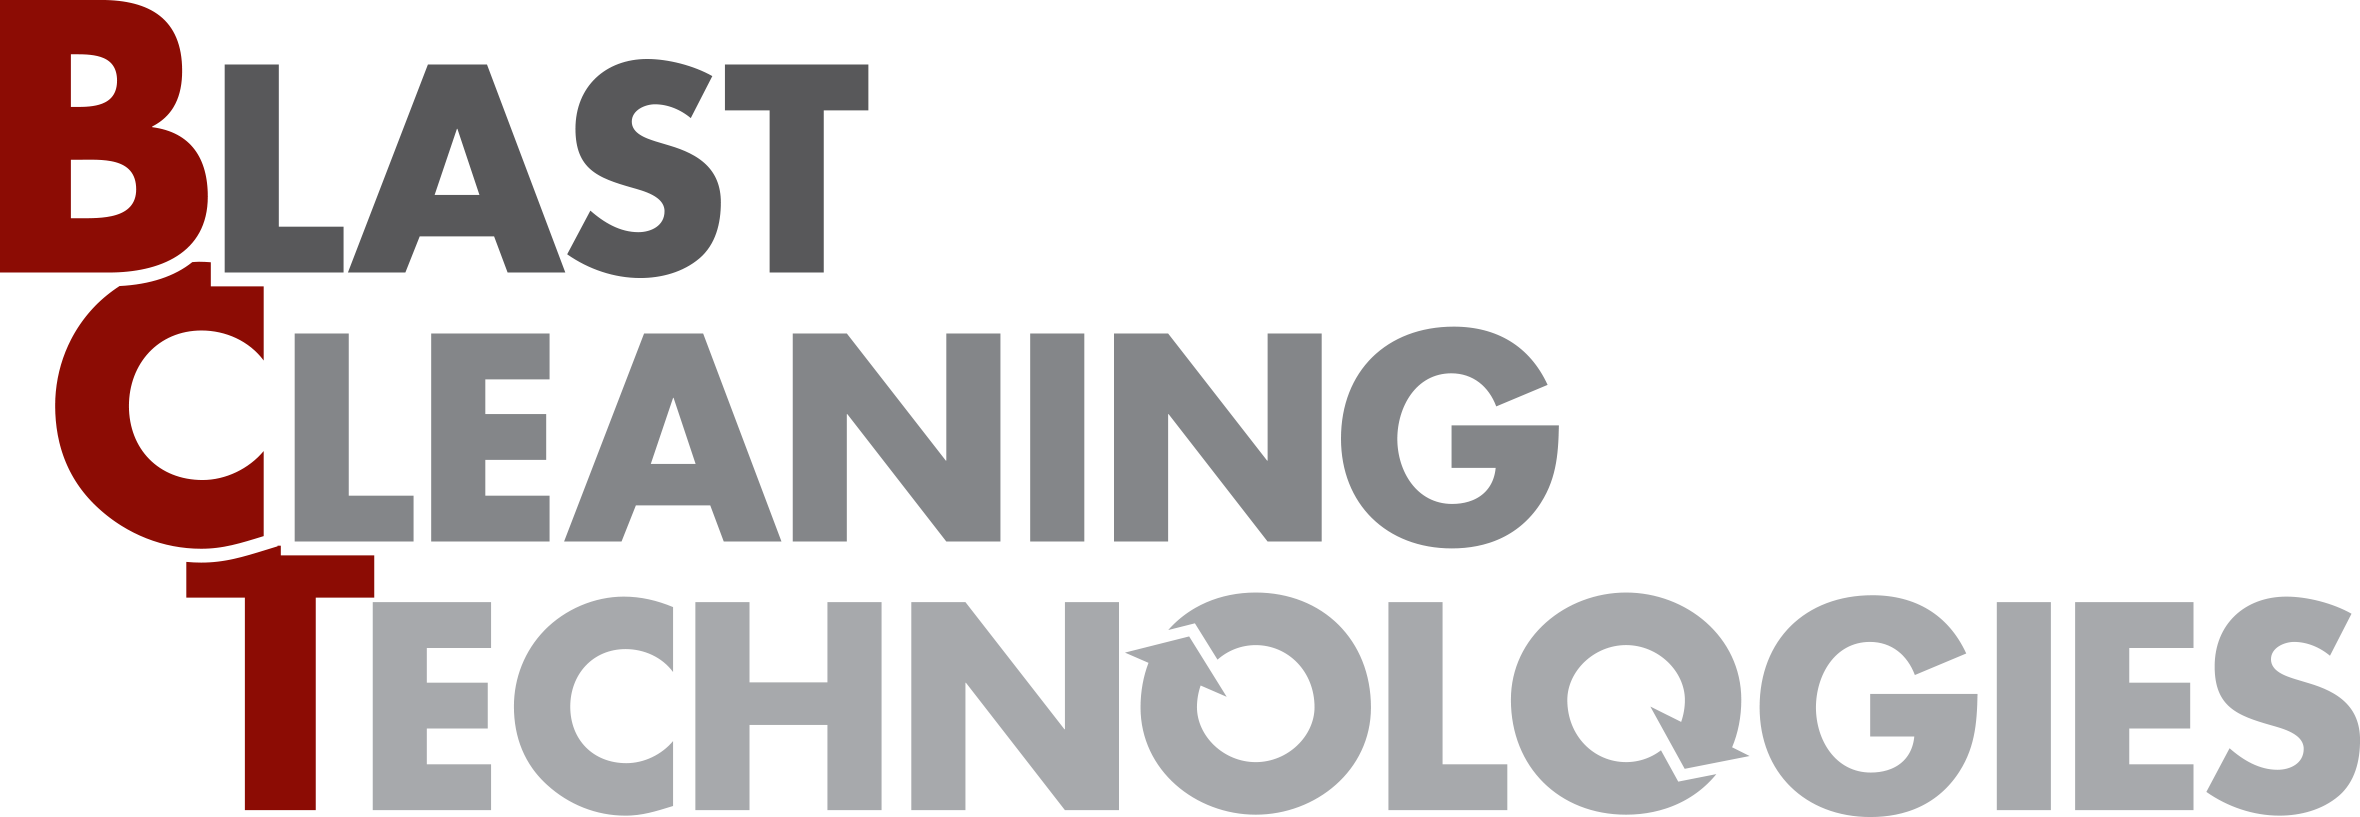 Blast Cleaning Technologies logo